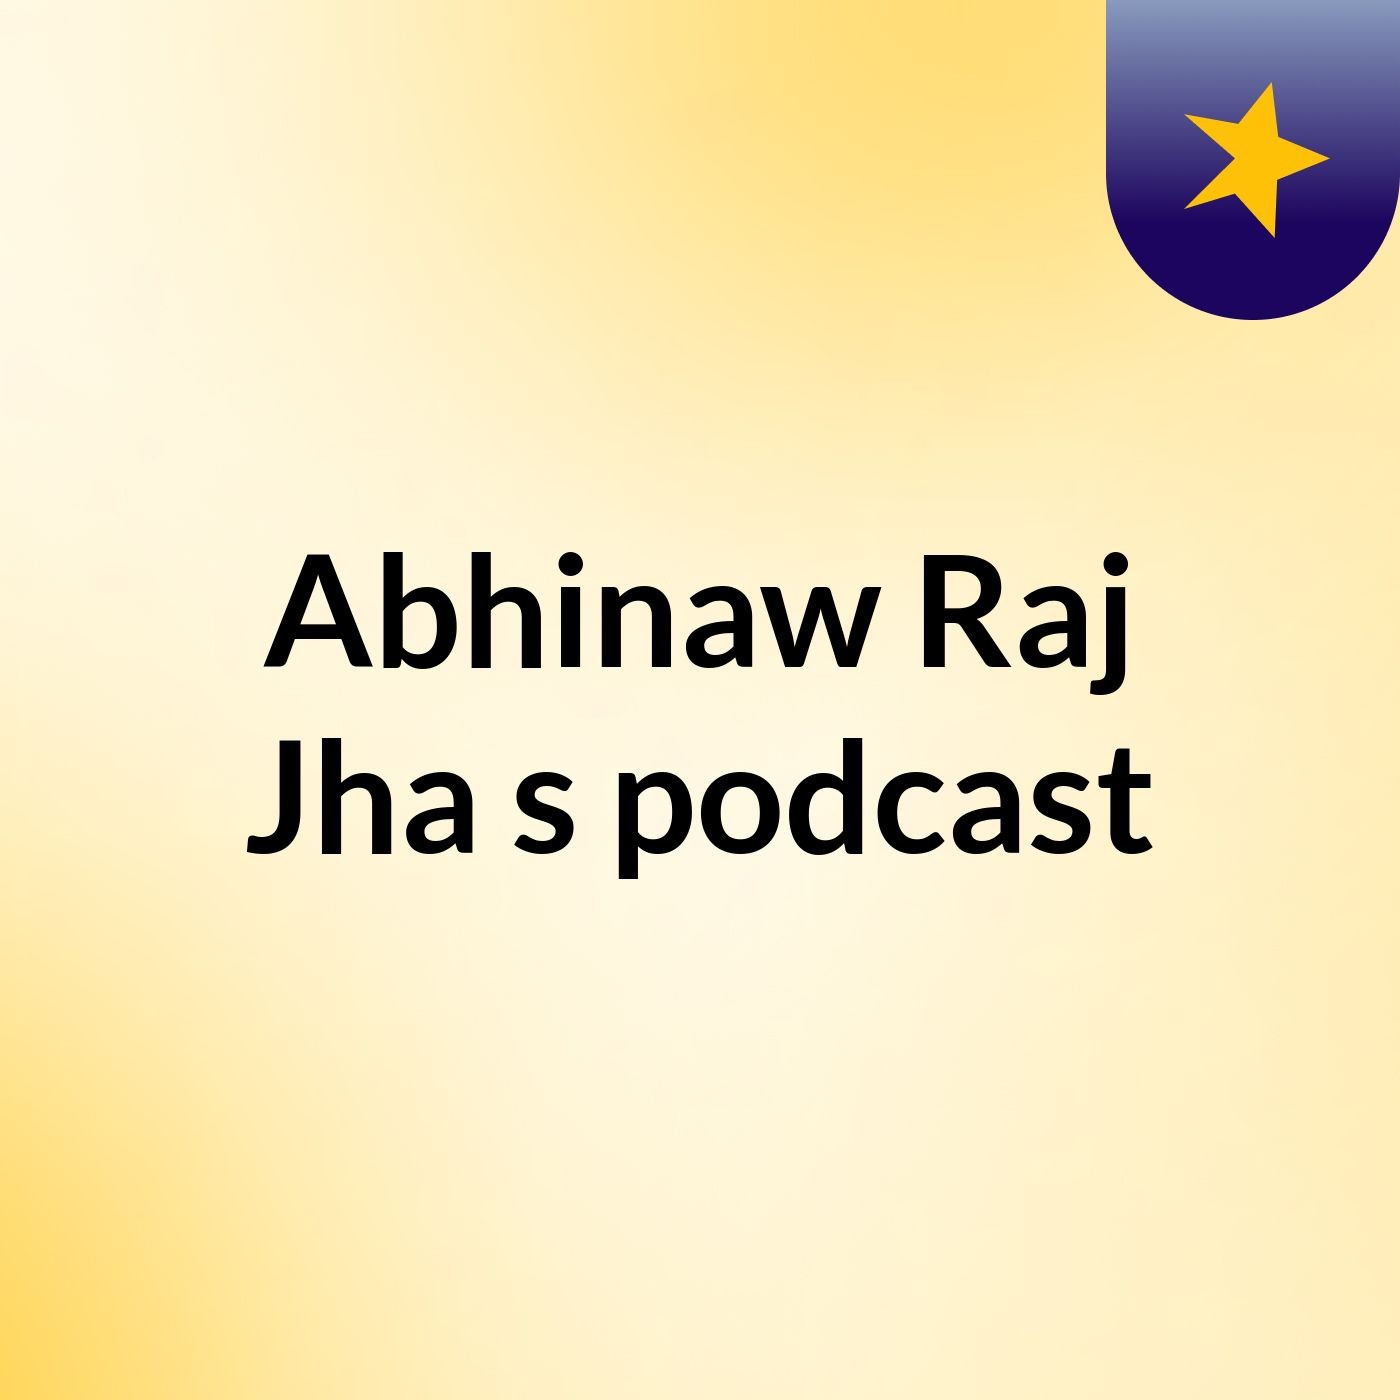 Episode 11 - Abhinaw Raj Jha's podcast